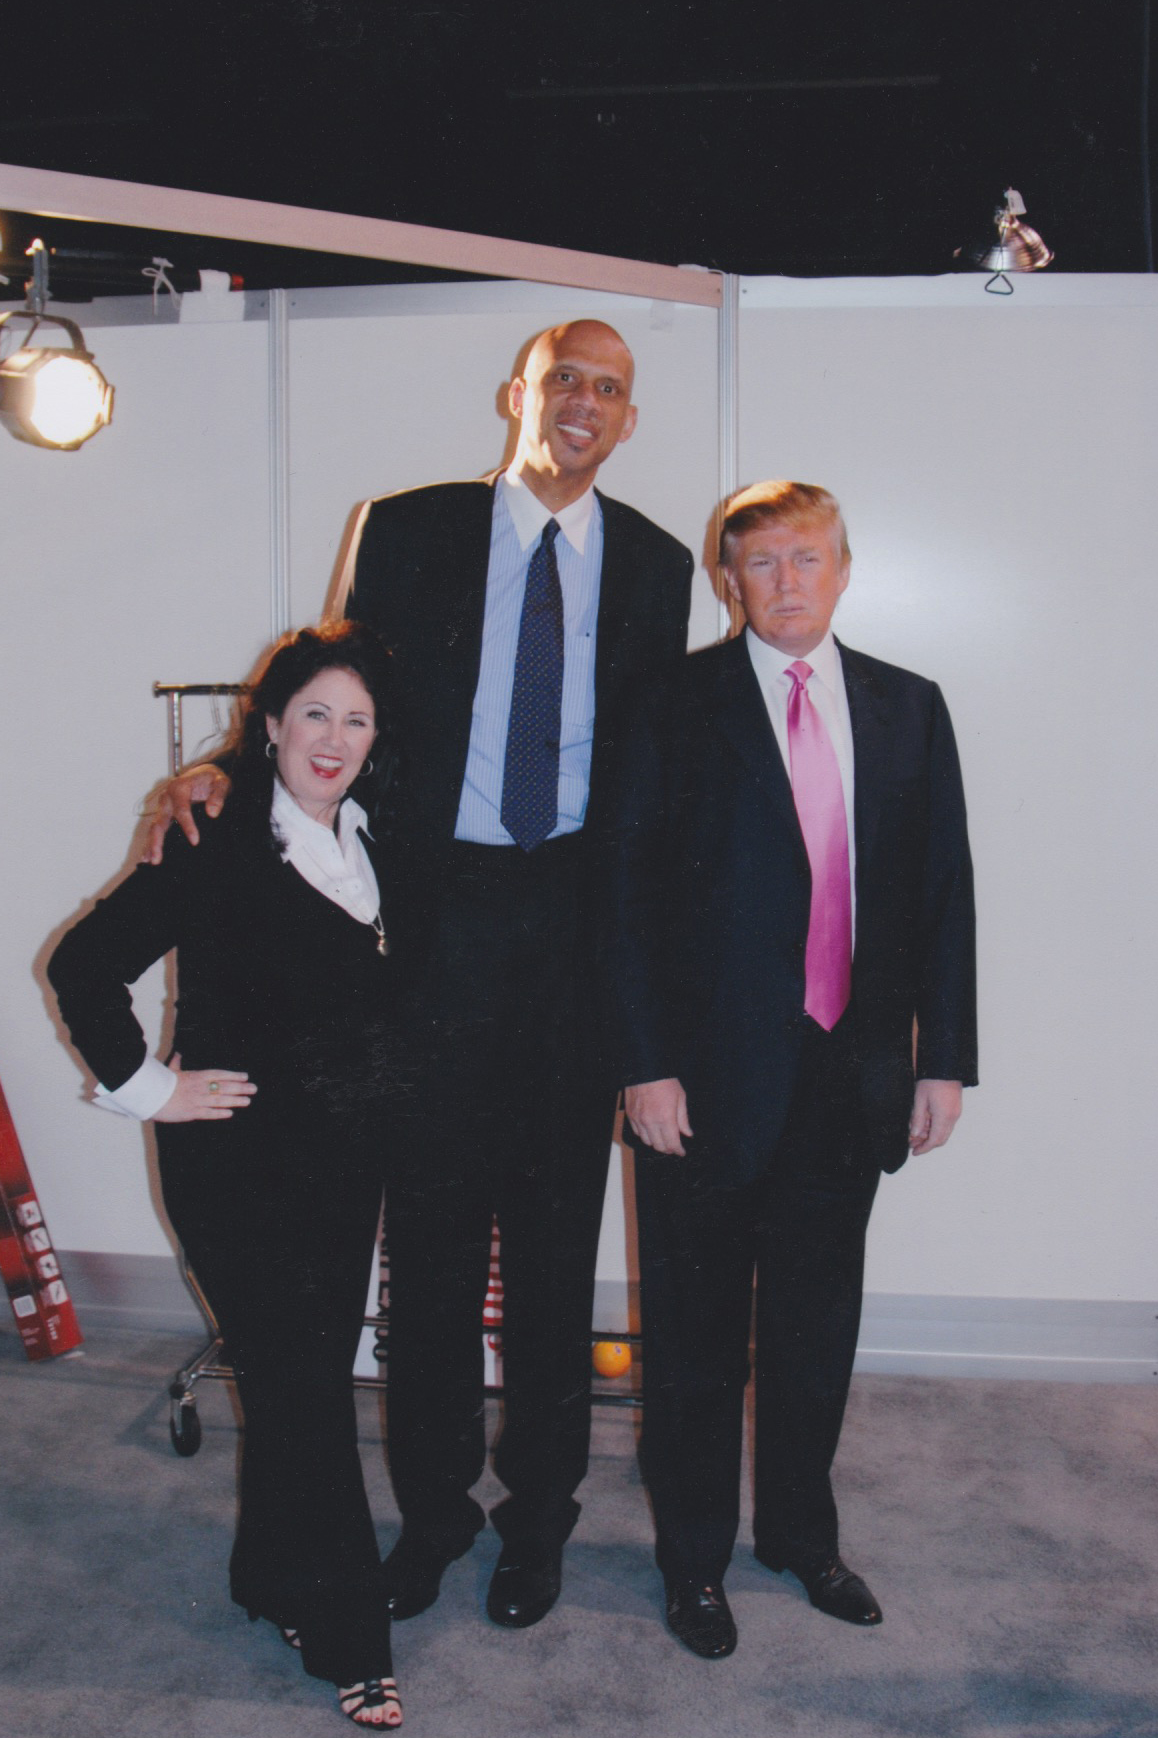 Kareem Abdul-Jabbar poses with Donald Trump. Photo provided by Kareem Abdul-Jabbar